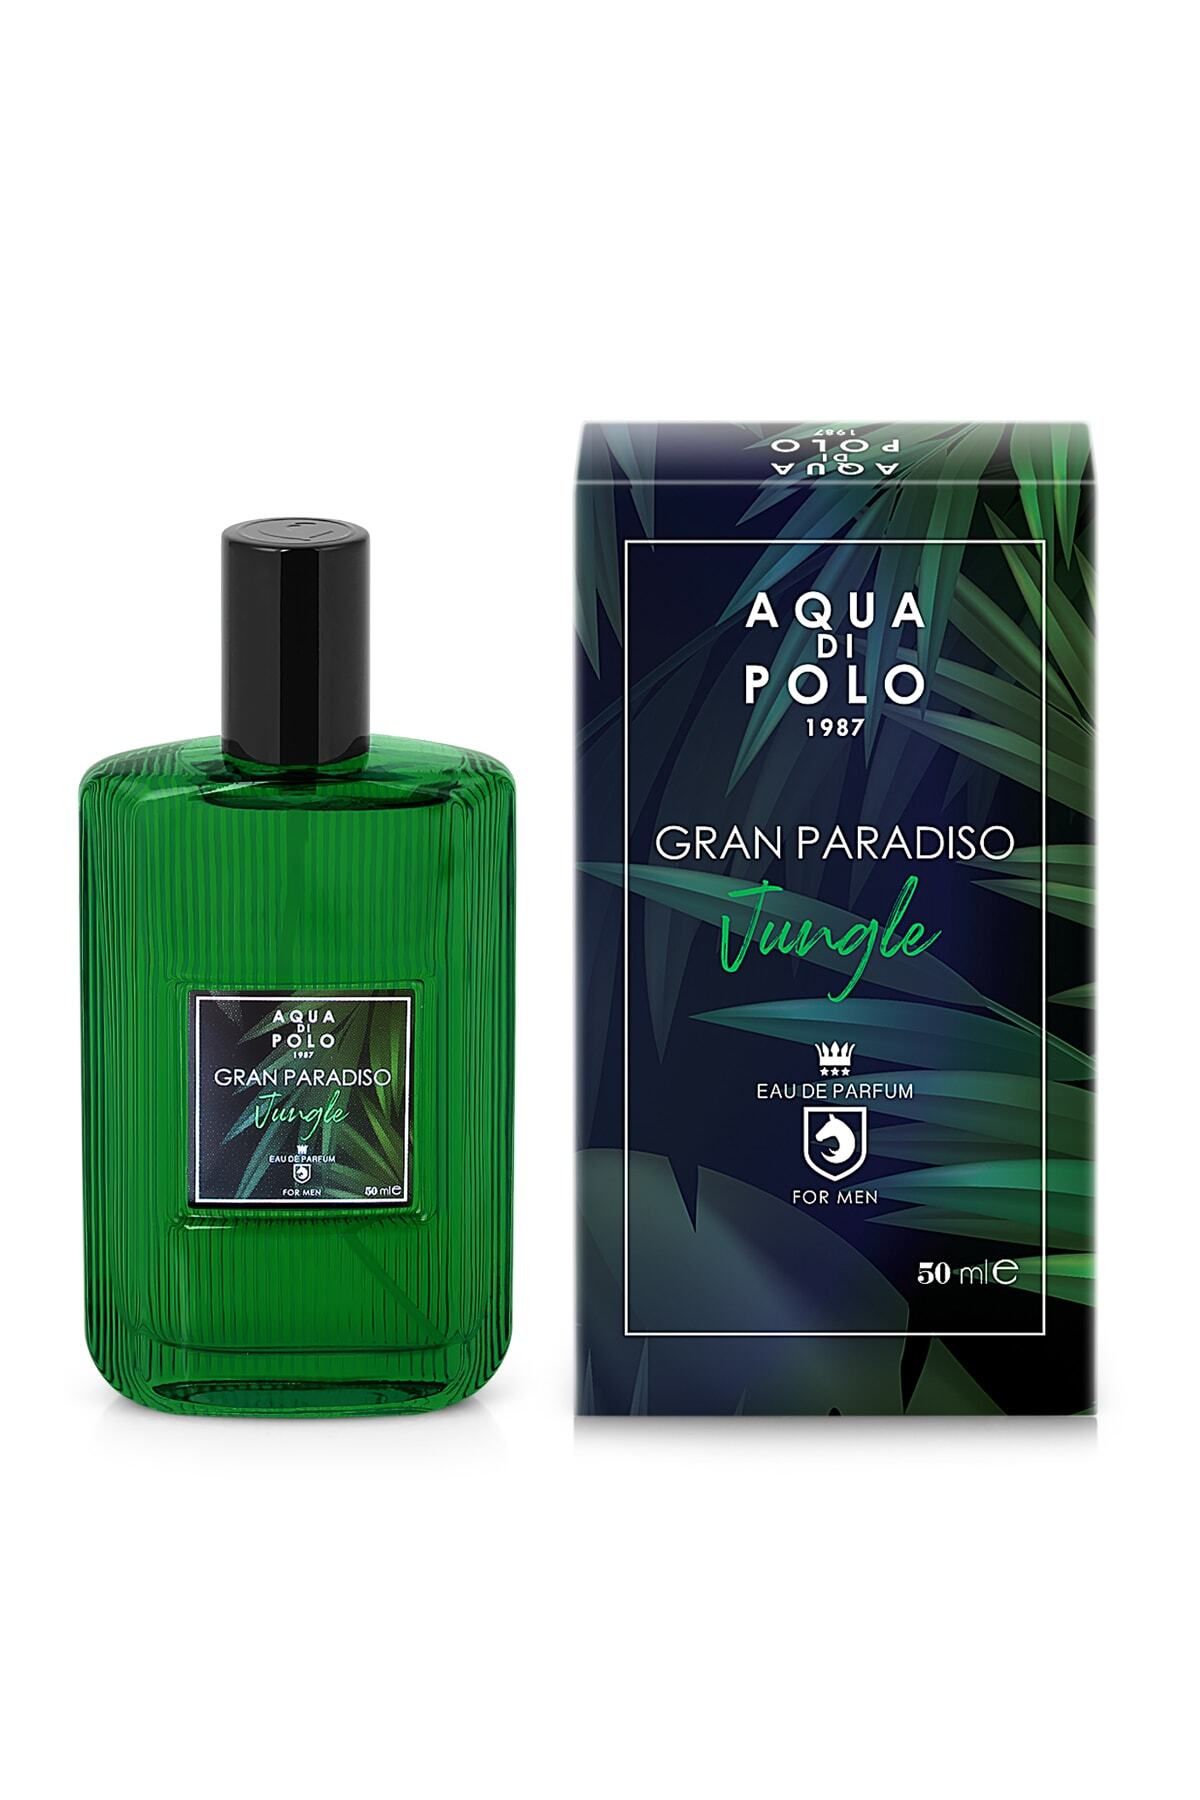 Aqua Di Polo 1987 Gran Paradiso Jungle Edp 50 ml Erkek Parfum Apppgj03ep